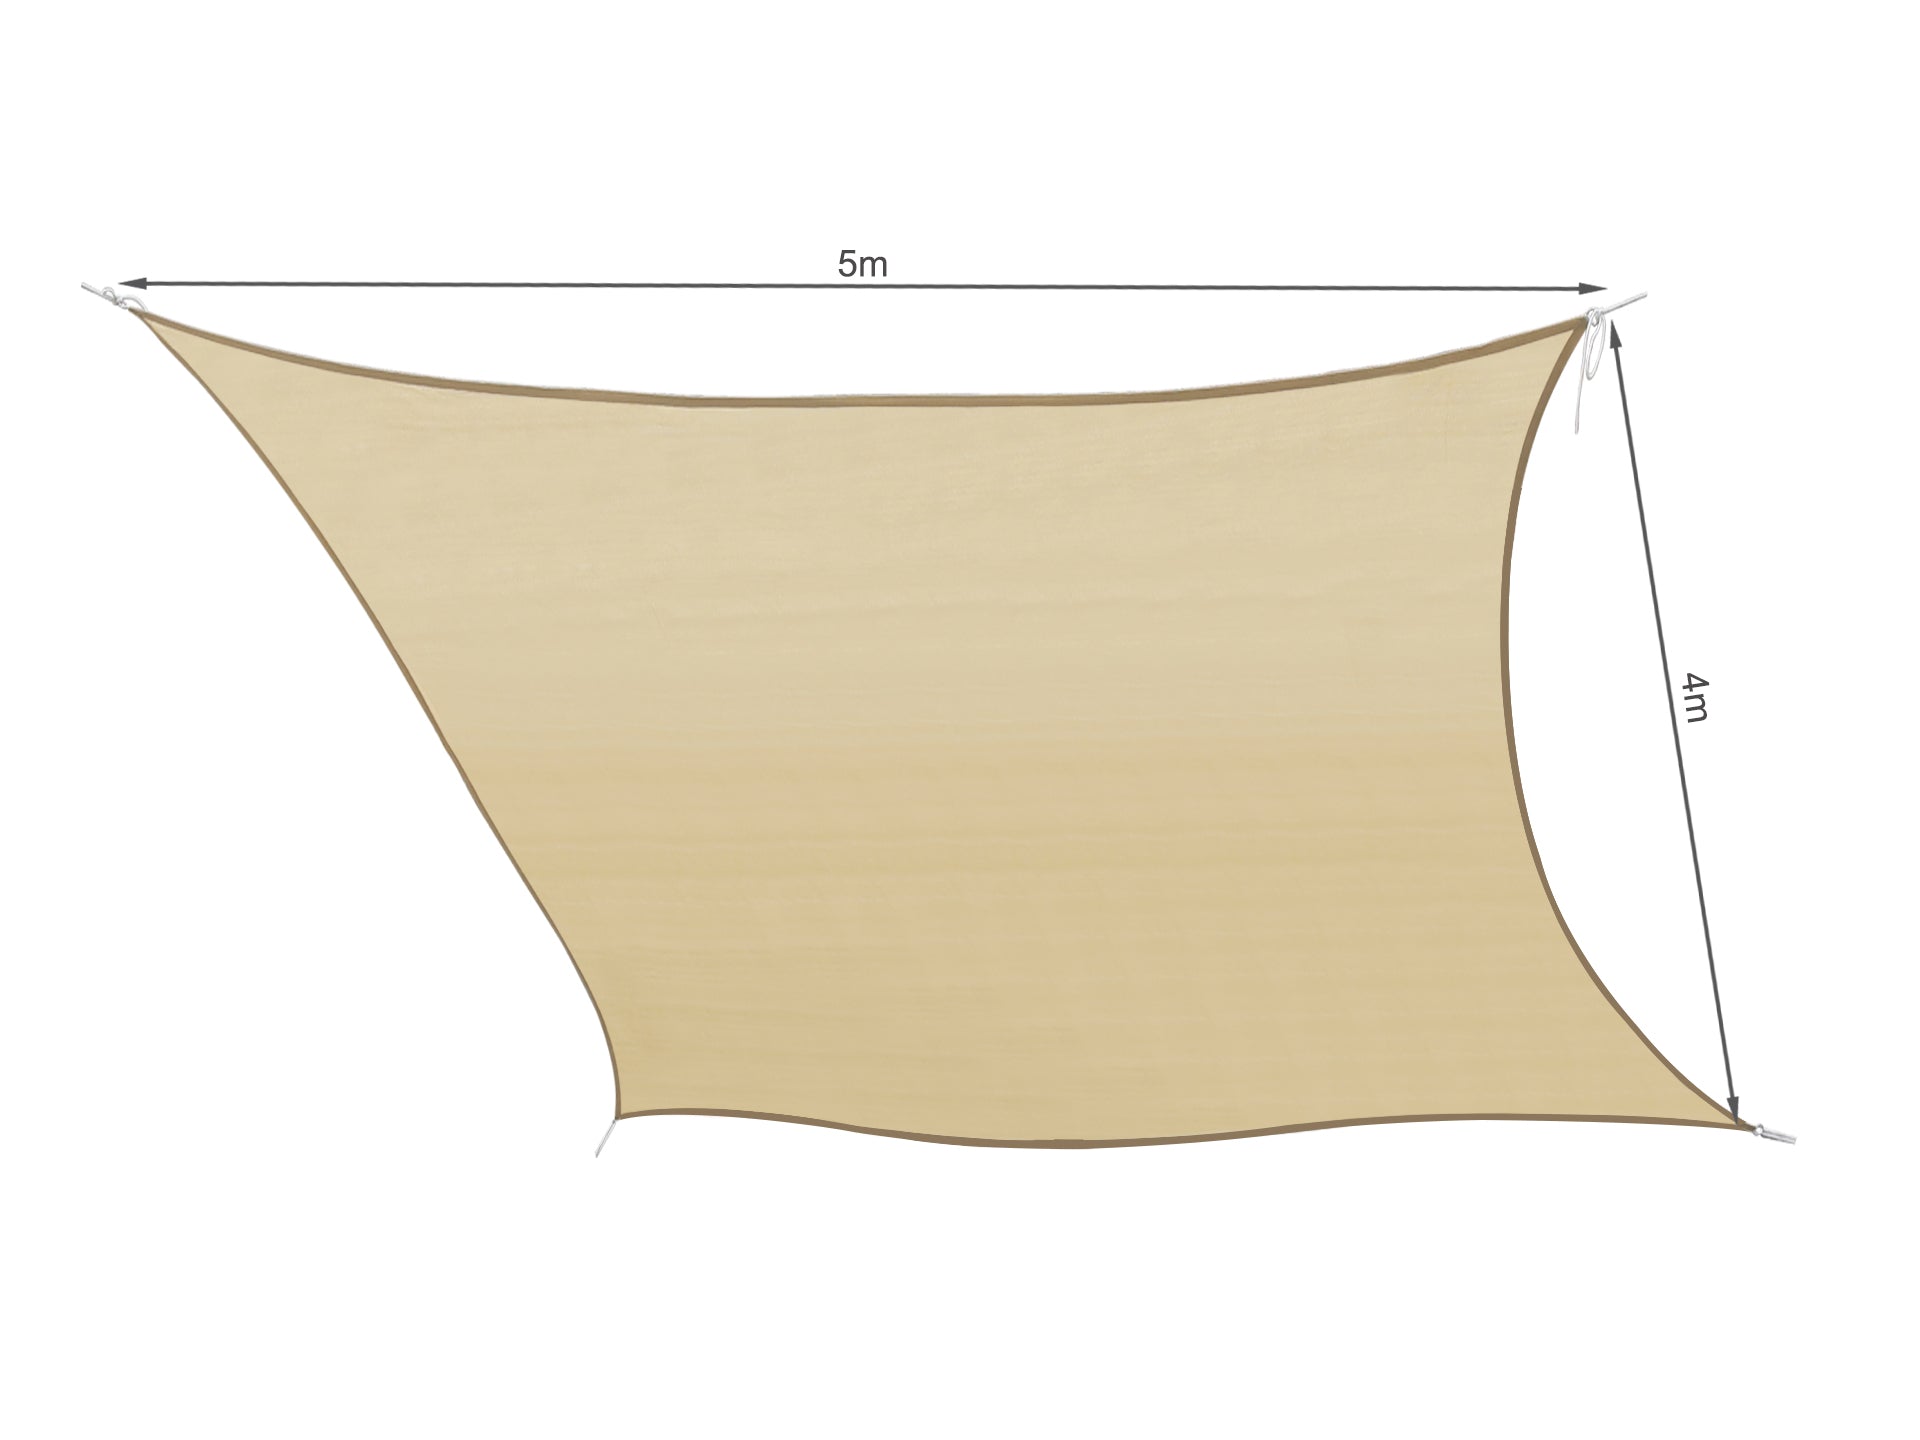 TOUGHOUT Kool Rectangle Shade Sail 4m x 5m - SAND